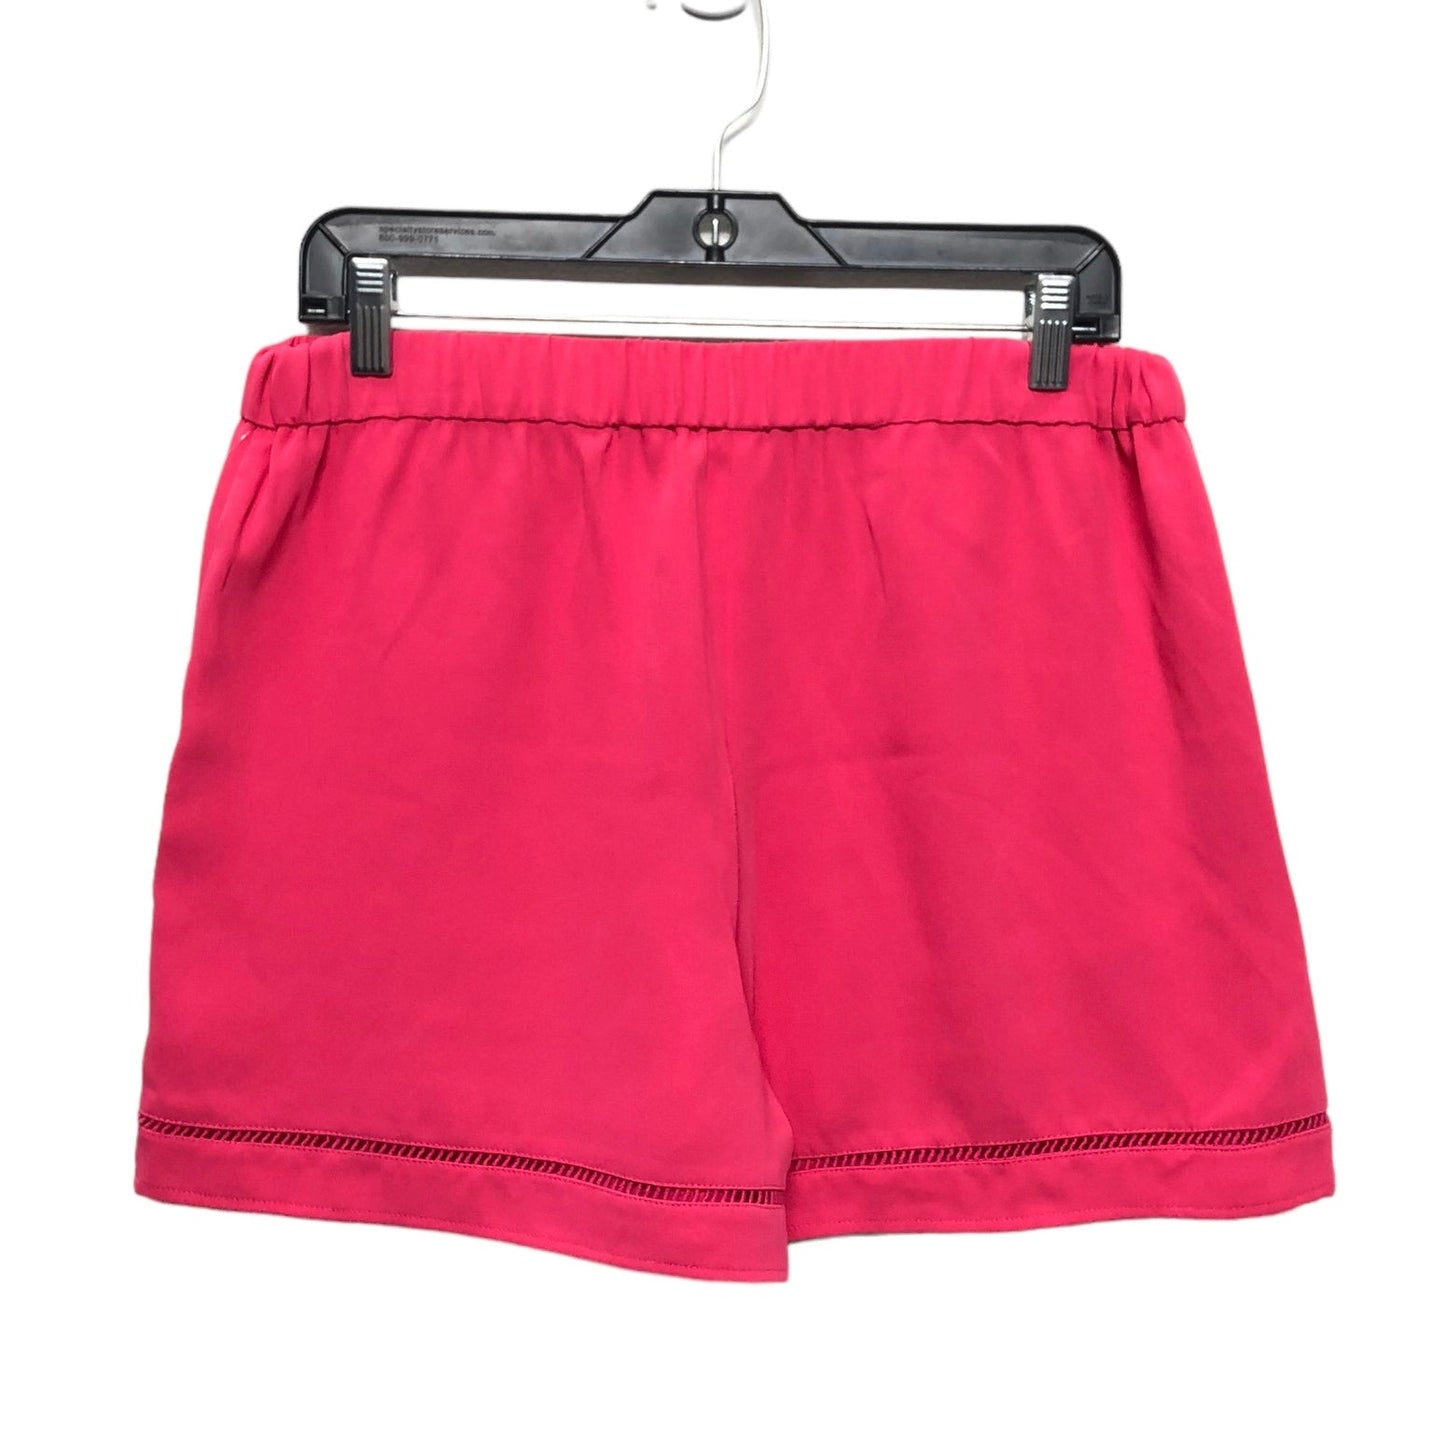 Shorts By Trina Turk  Size: S